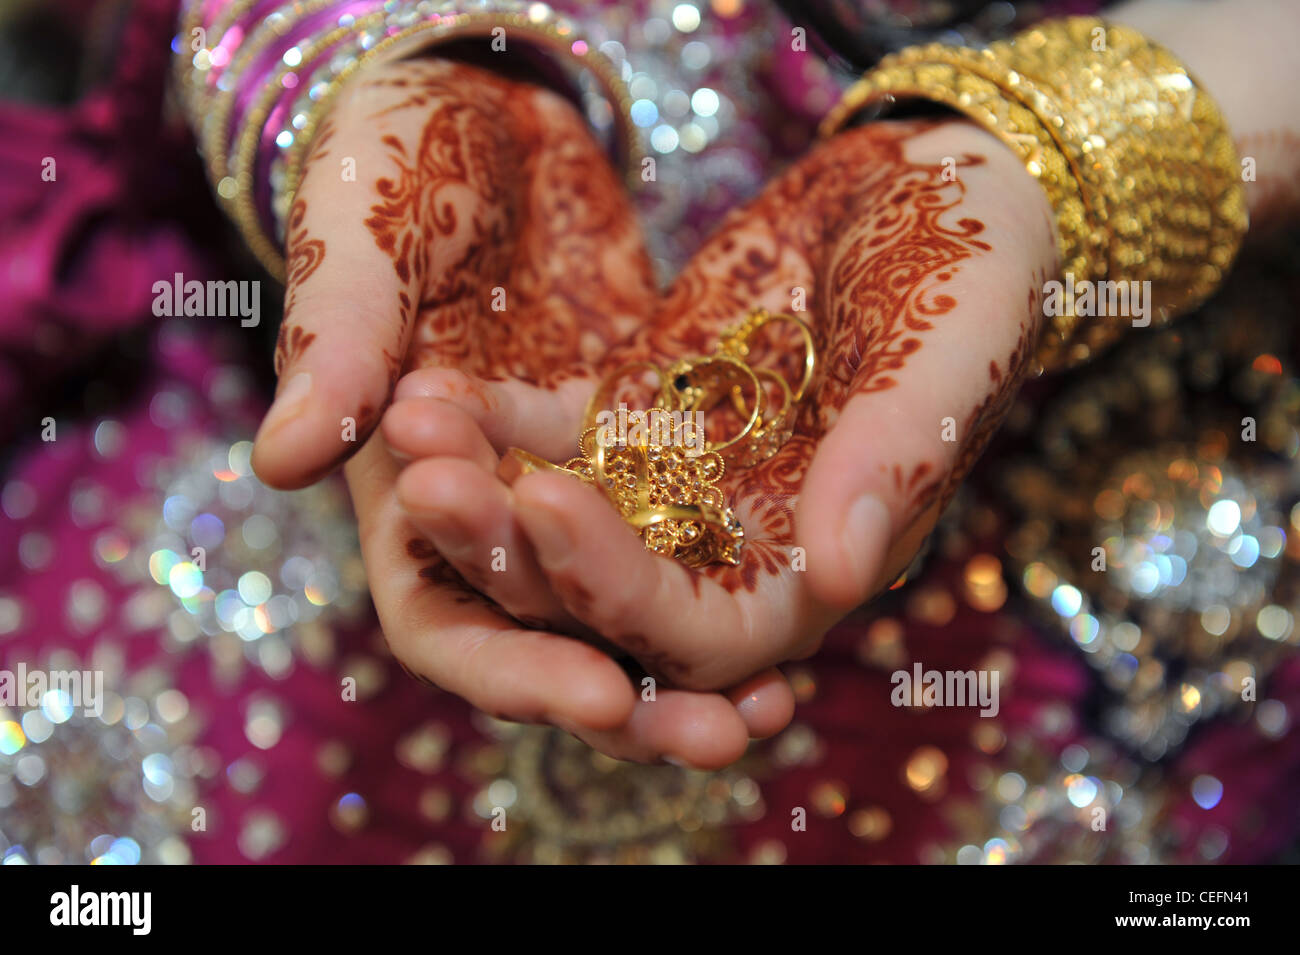 Pin by Hoorain Ansari Interprises on Pakistani bride groom | Indian wedding  couple photography, Wedding couple poses, Indian wedding couple